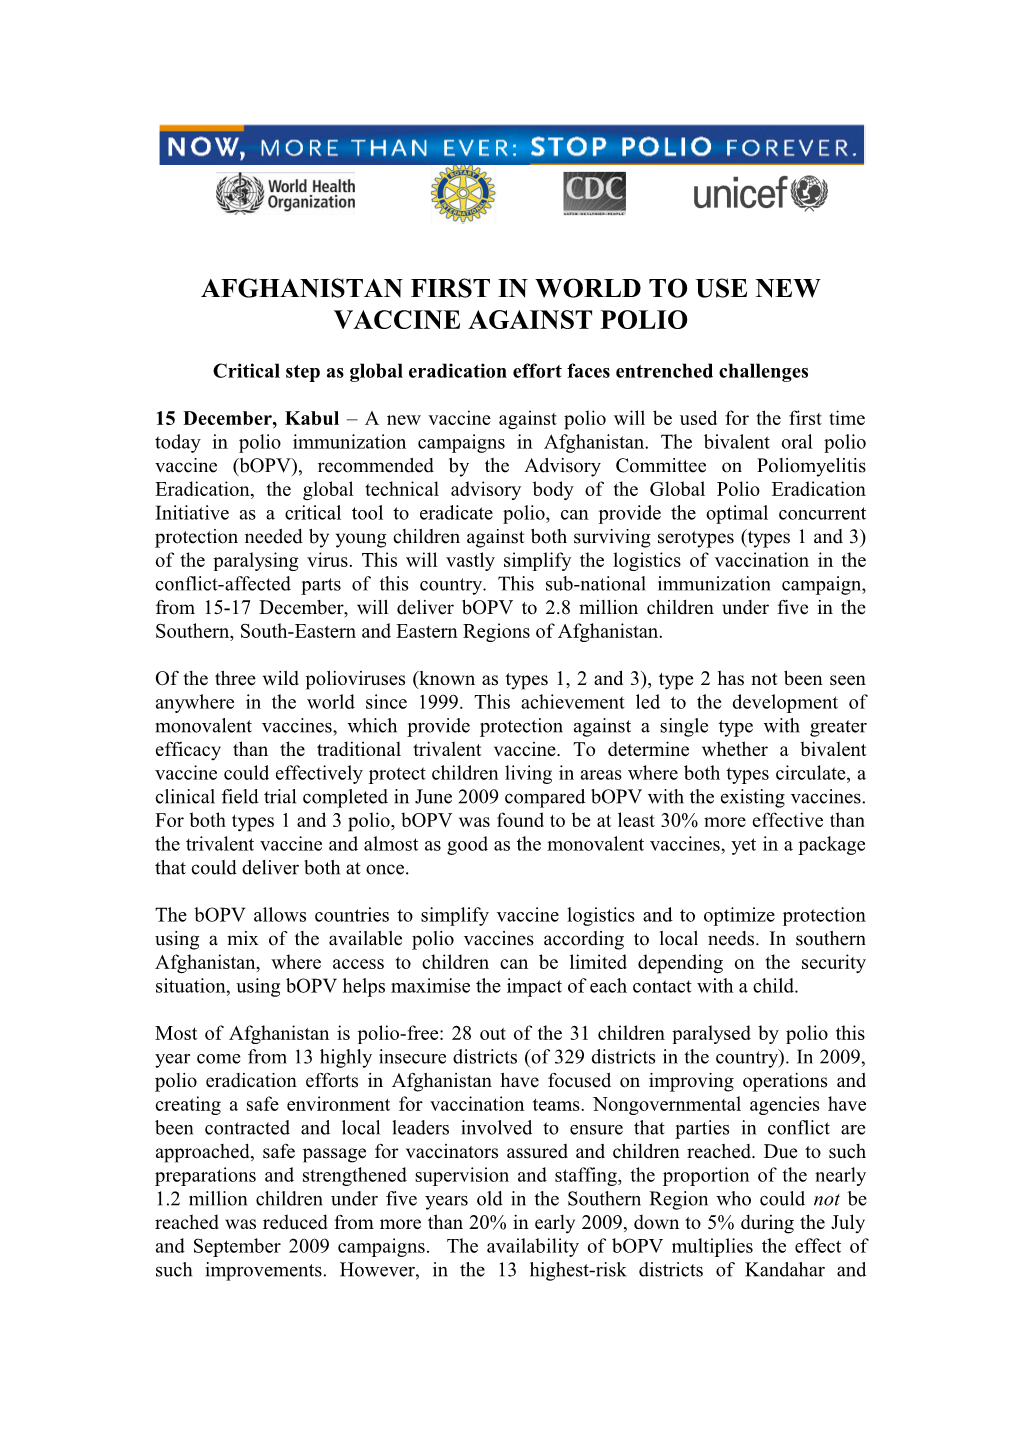 Draft Partnership Press Release on Bopv in AFG